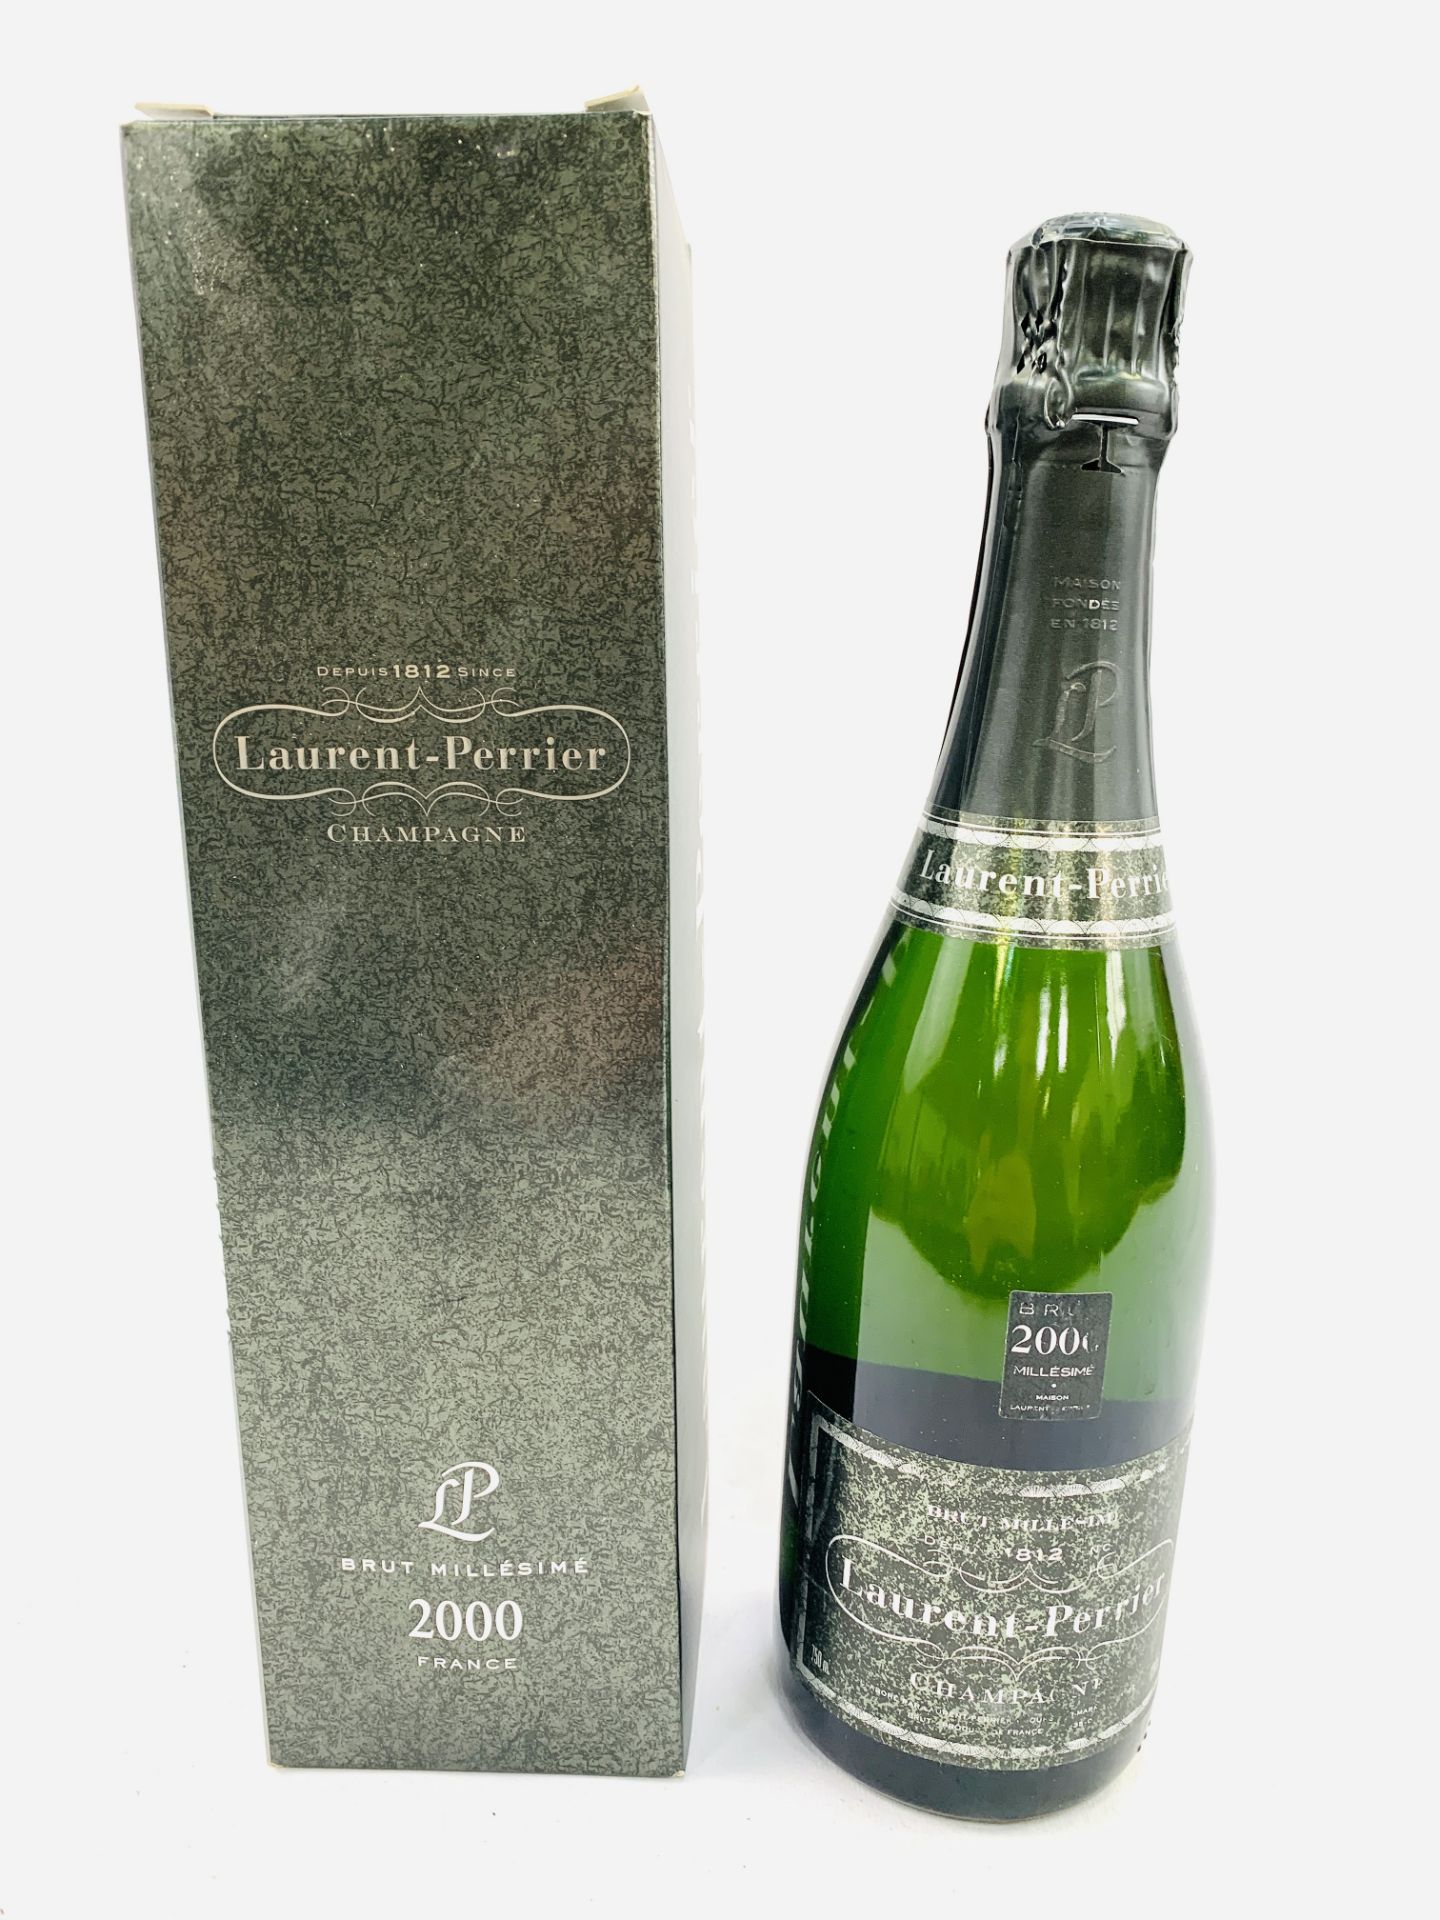 75cl bottle 2000 Laurent-Perrier Brut Millesime champagne